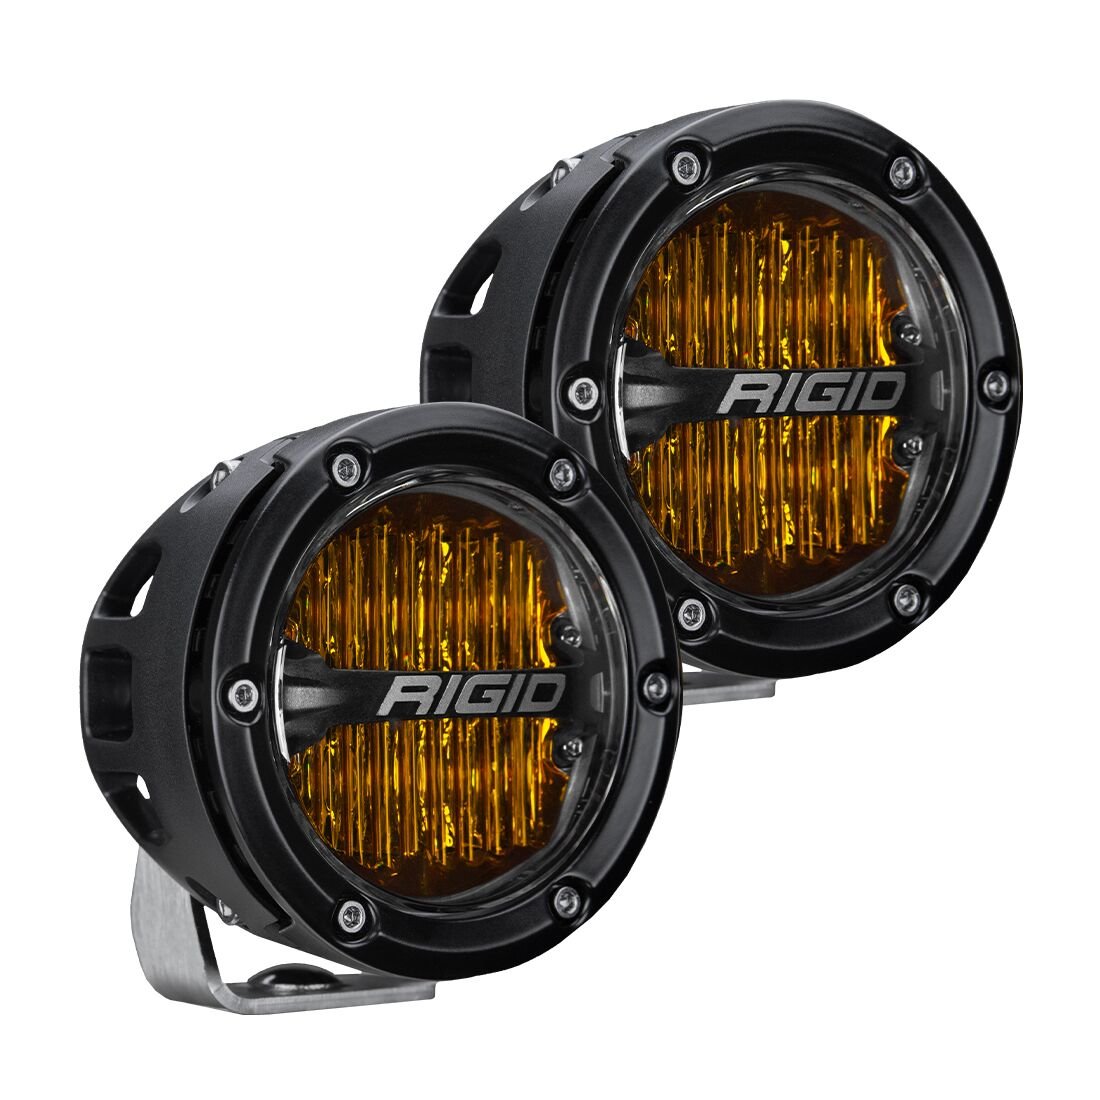 Rigid Industries 360-Series 4" Round LED Lights | Quadratec